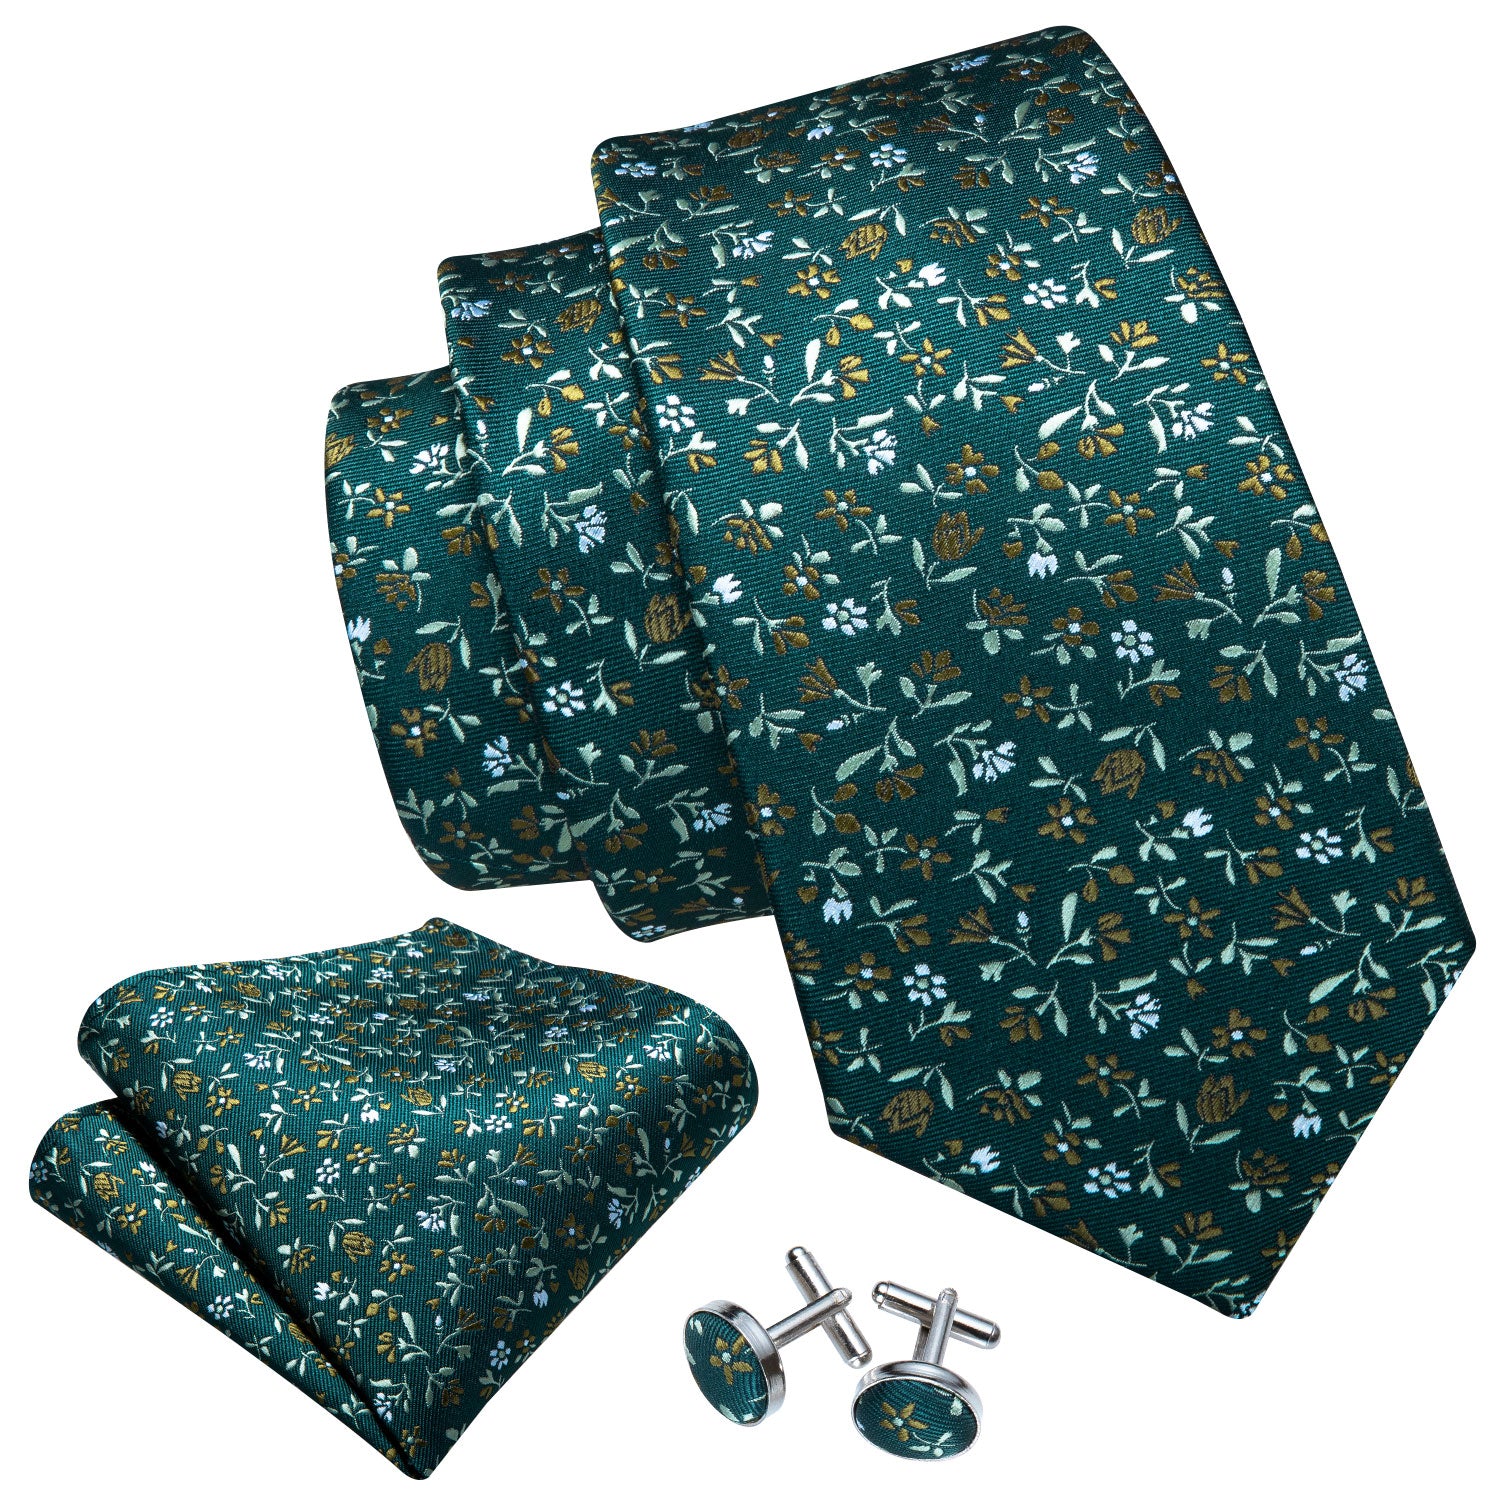 Barry Wang Men's Tie Olive Green Small Floral Tie Hanky Cufflinks Set